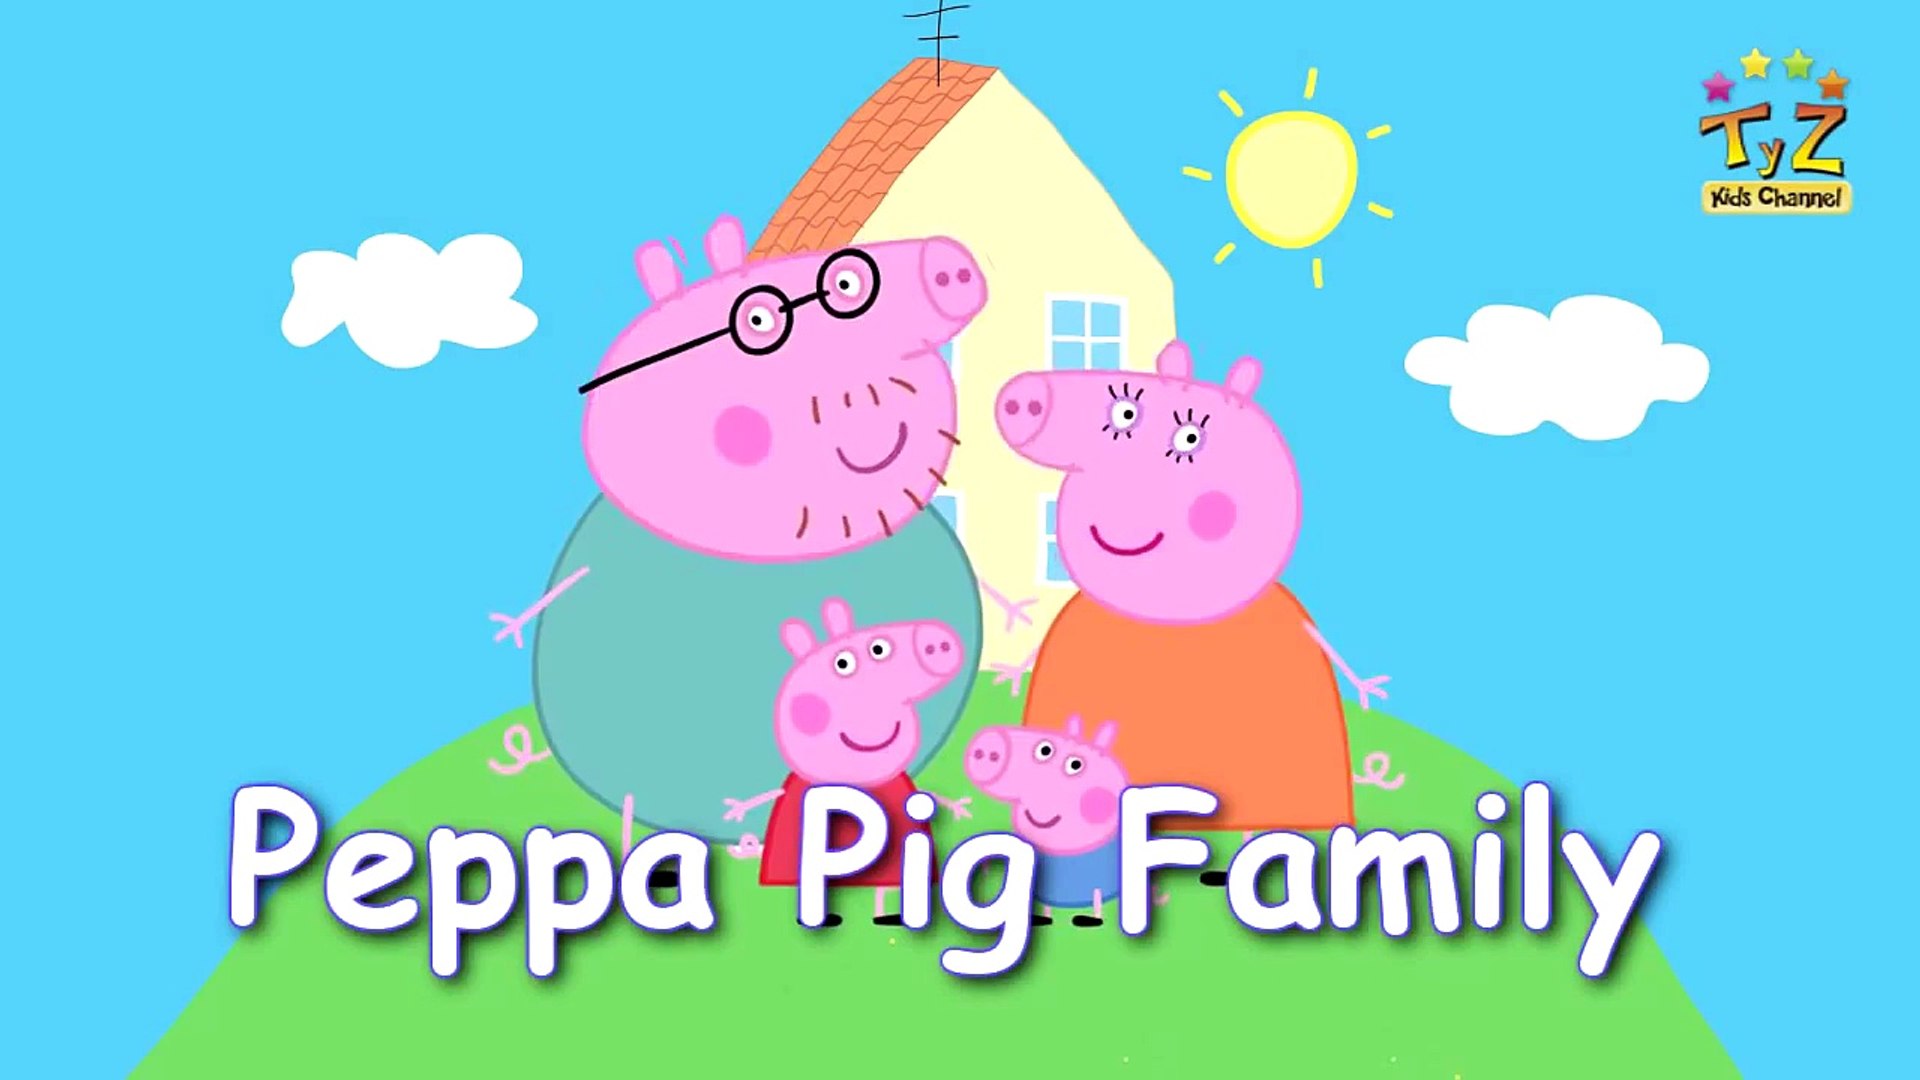 FINGER FAMILY PEPPA PIG The Finger Family song TyZ Kids Channel - video  Dailymotion